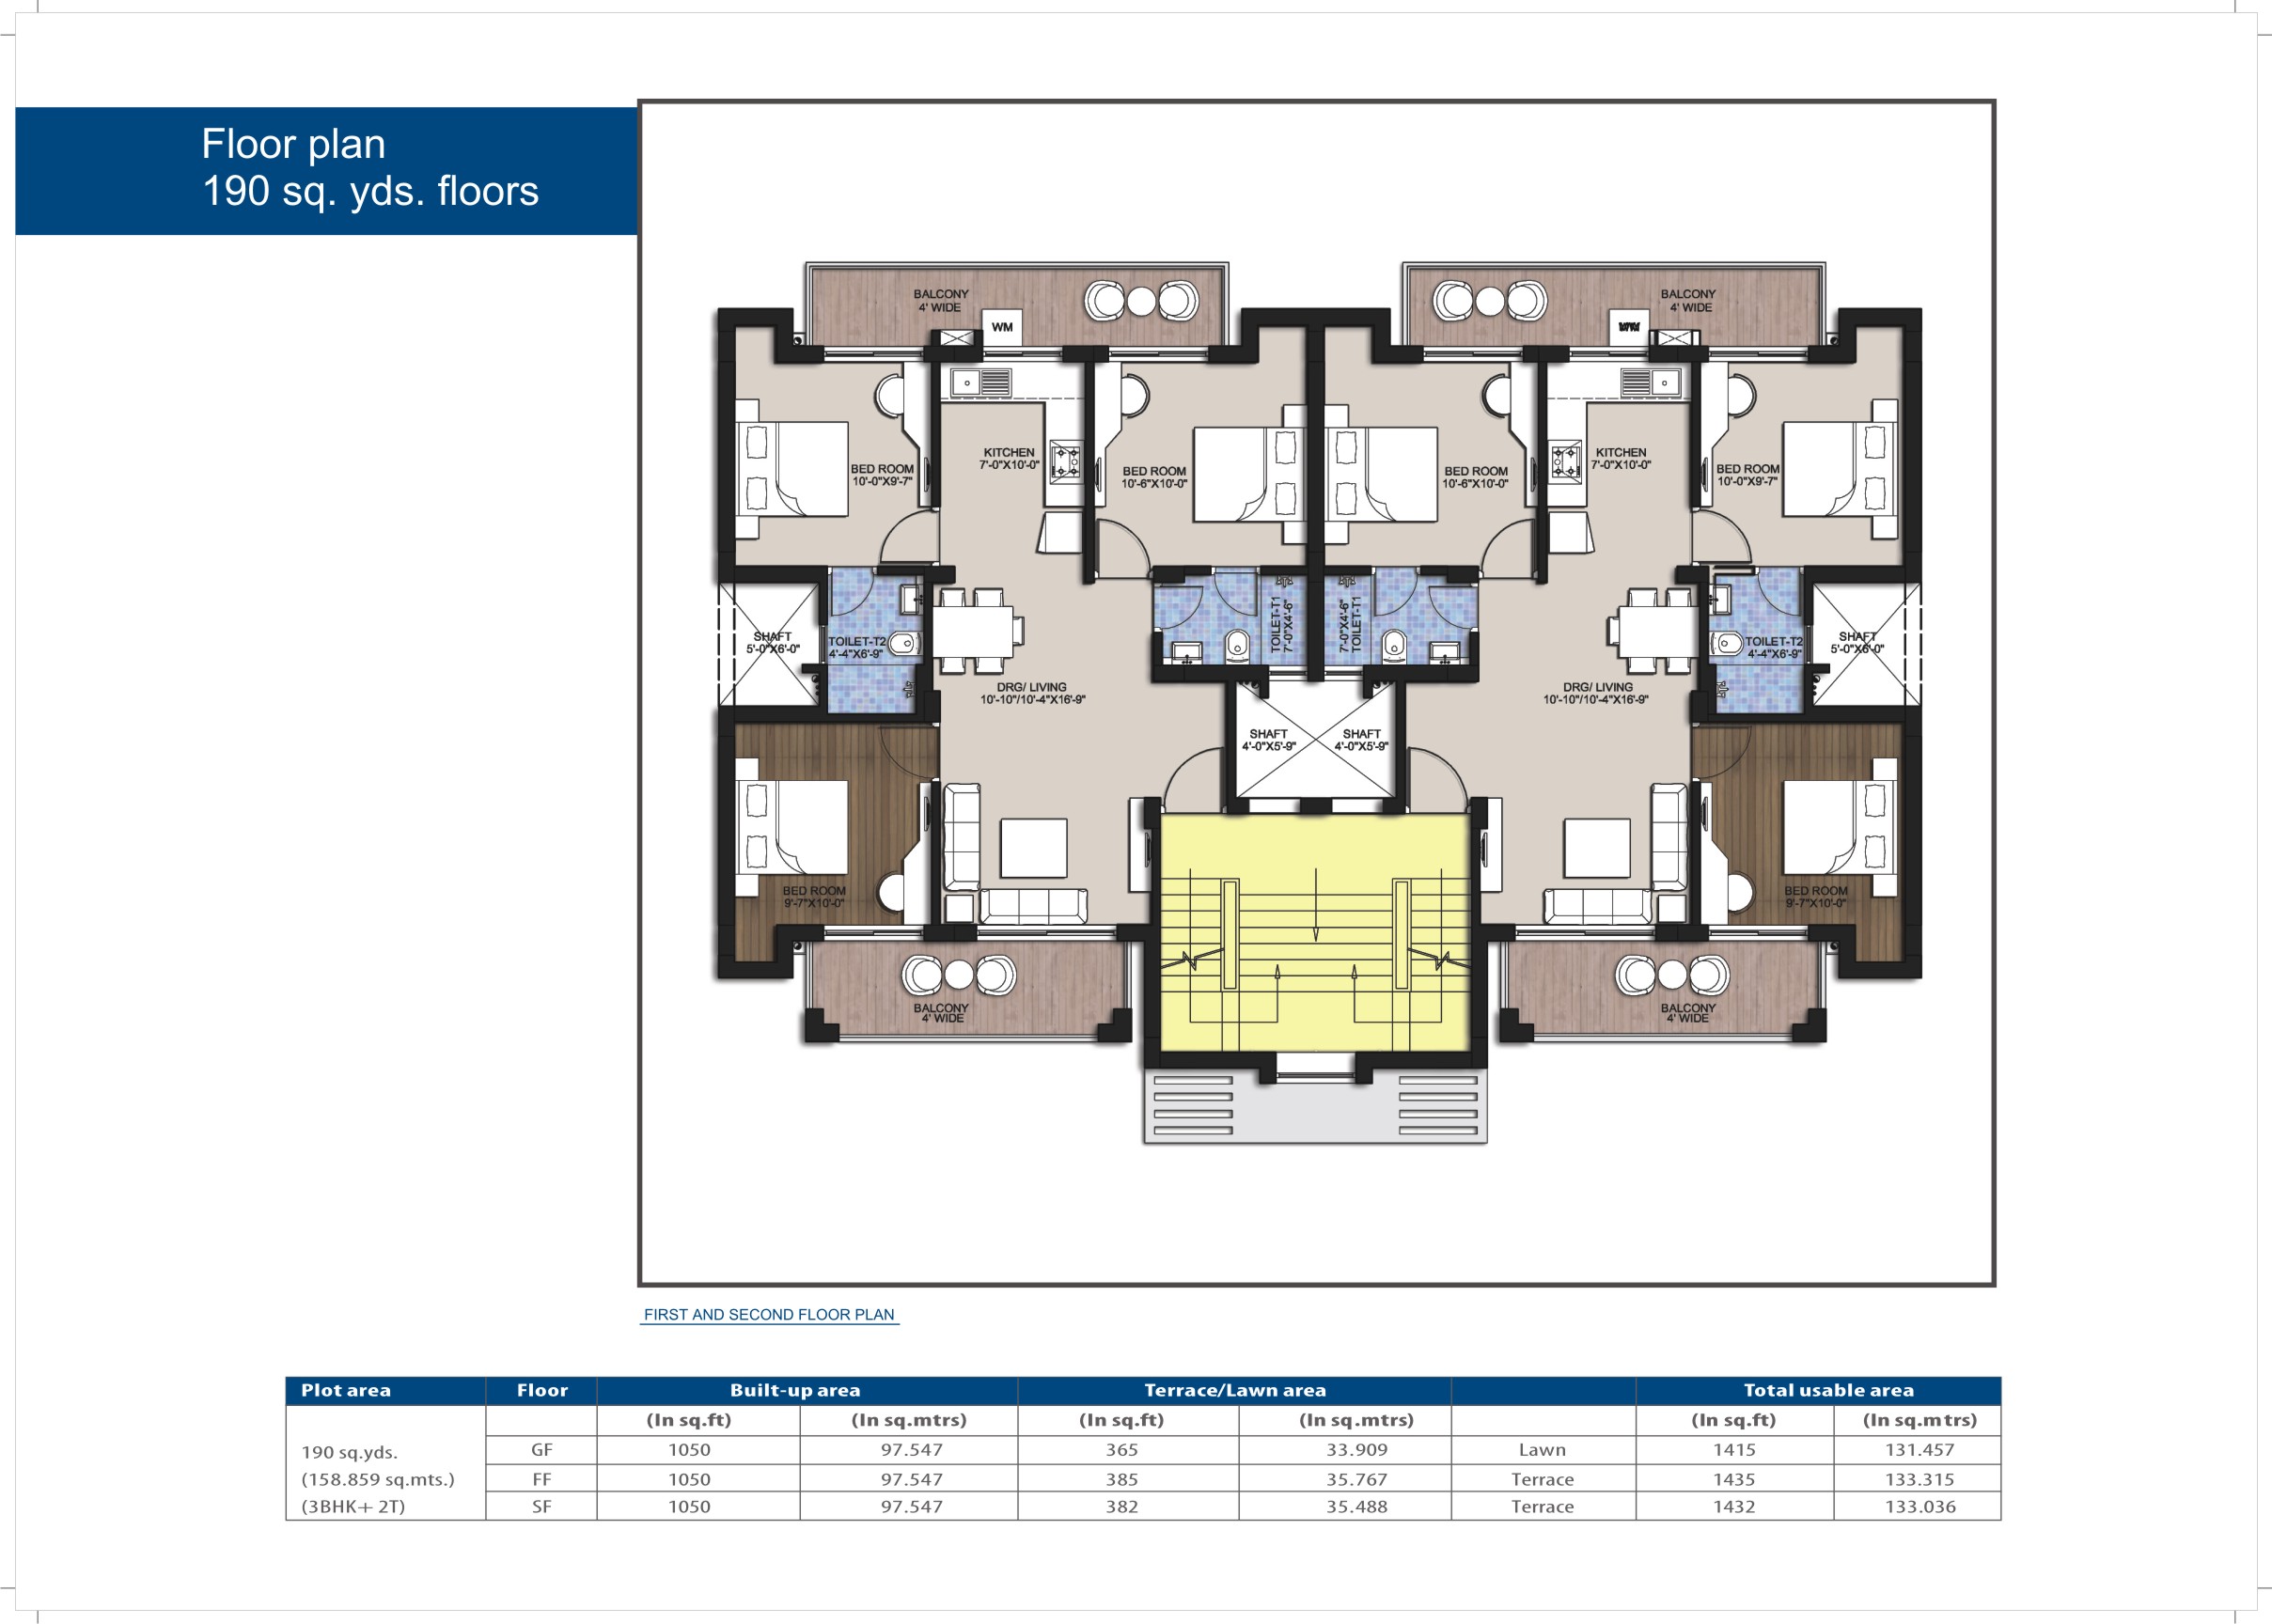 Floor plan 190 sq.yds.floors_190 sq.yds. (158.859 sq. mts.)_3 BHK+2T_First & second Floor plan